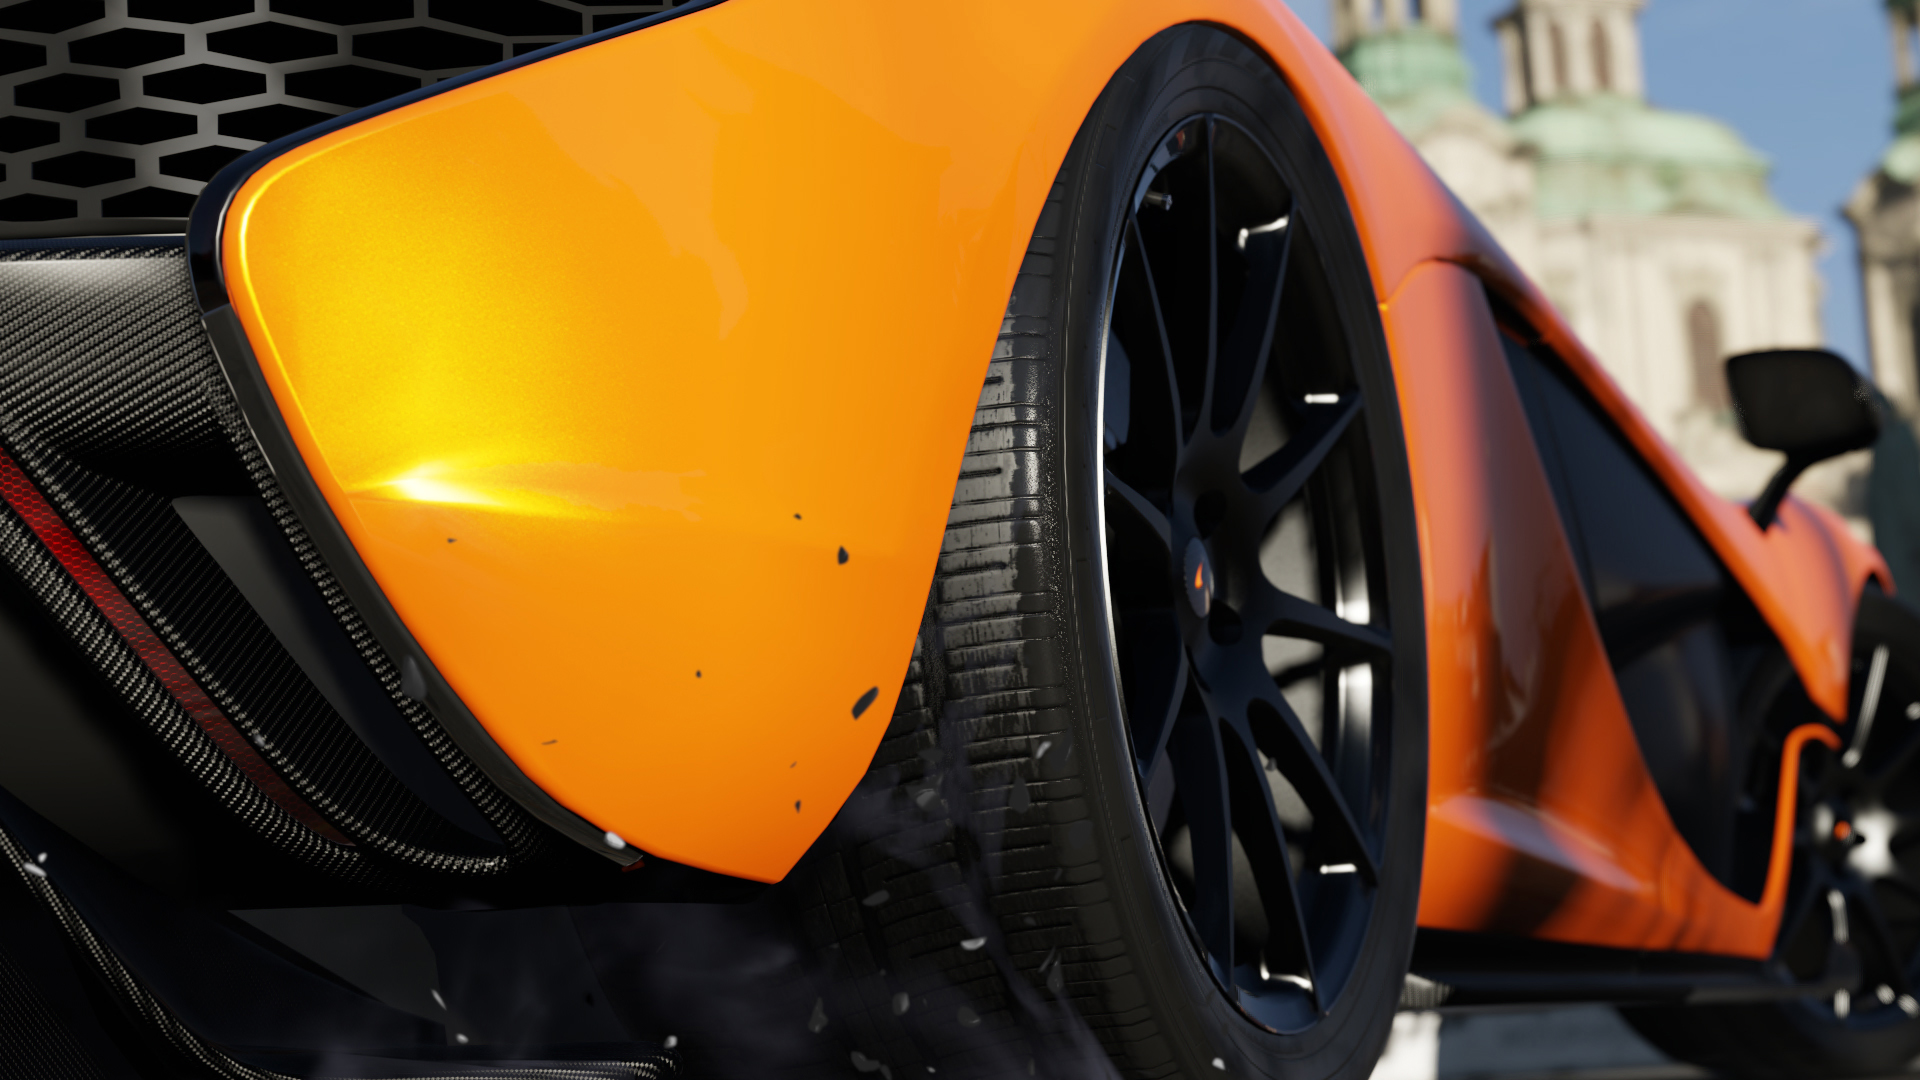 Forza Motorsport 5 Backgrounds on Wallpapers Vista